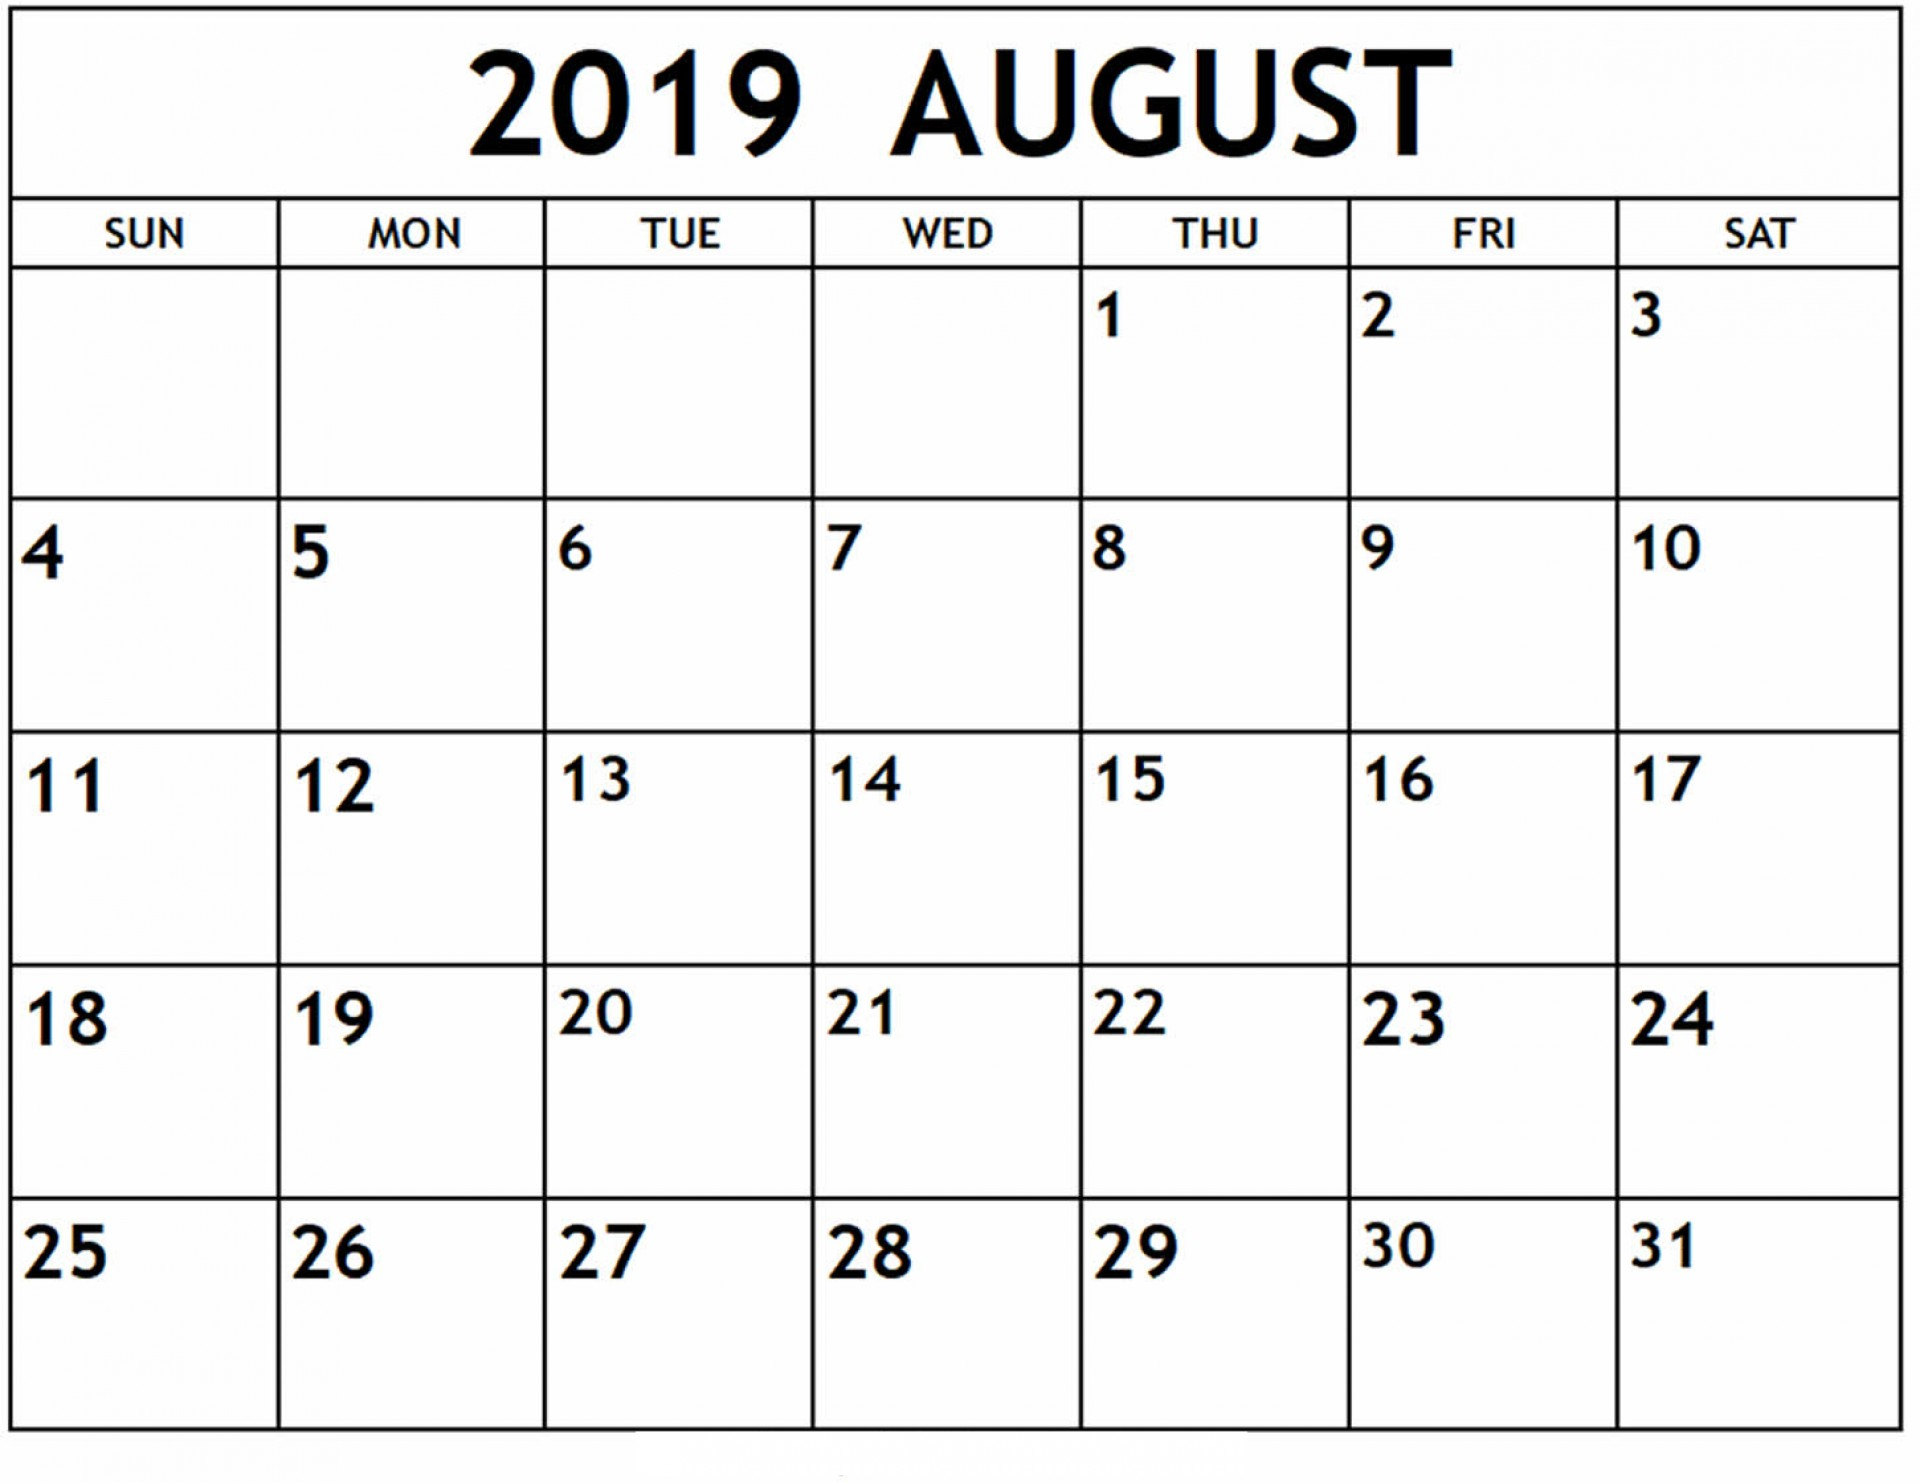 021 August Calendar Holidays Blank Landscape Template